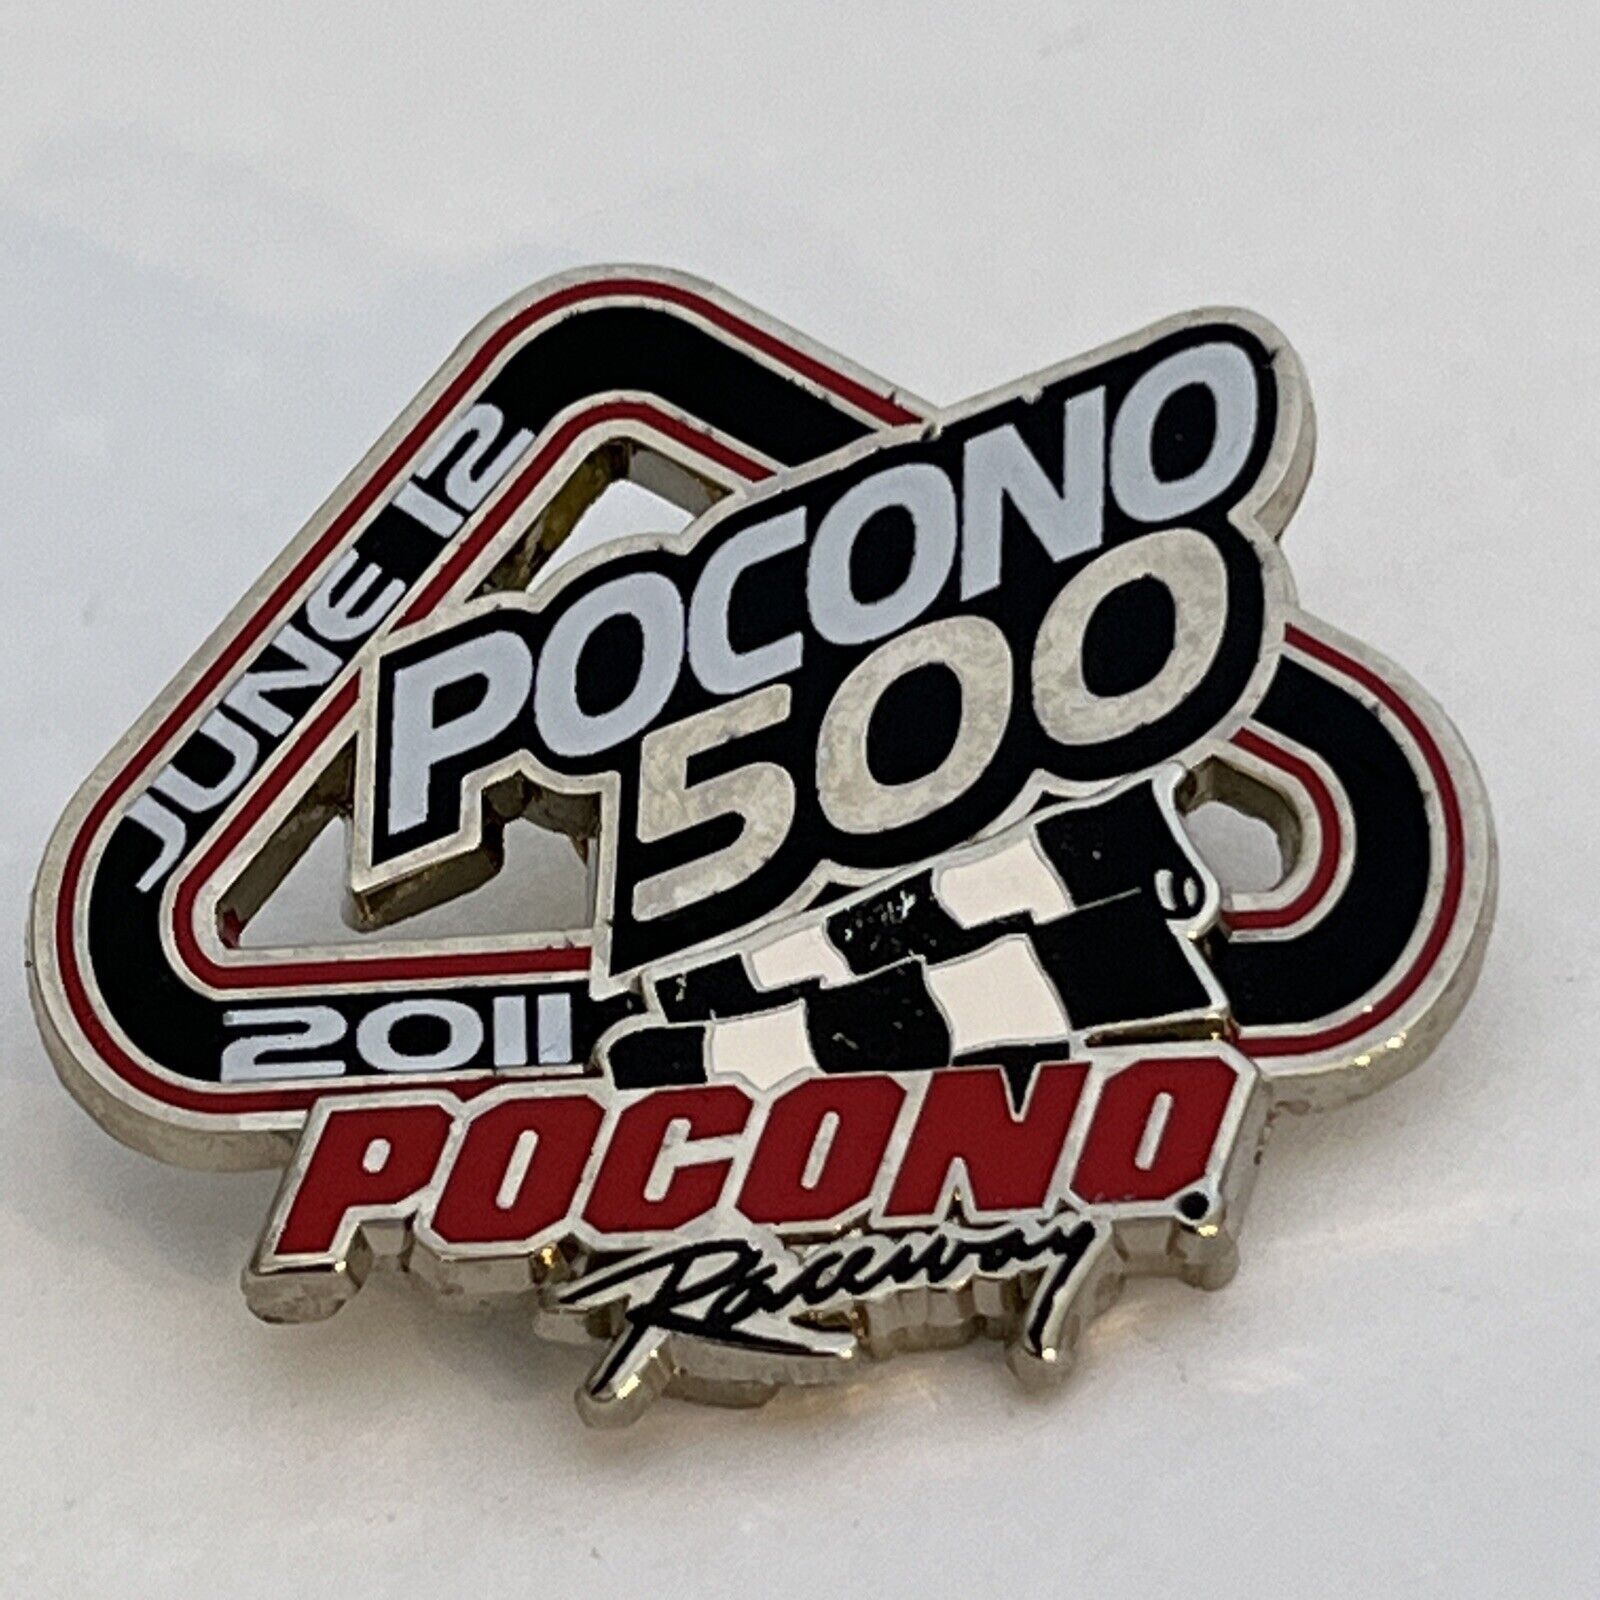 2011 Pocono 500 NASCAR Raceway Long Pond Pennsylvania Race Racing Lapel Pin